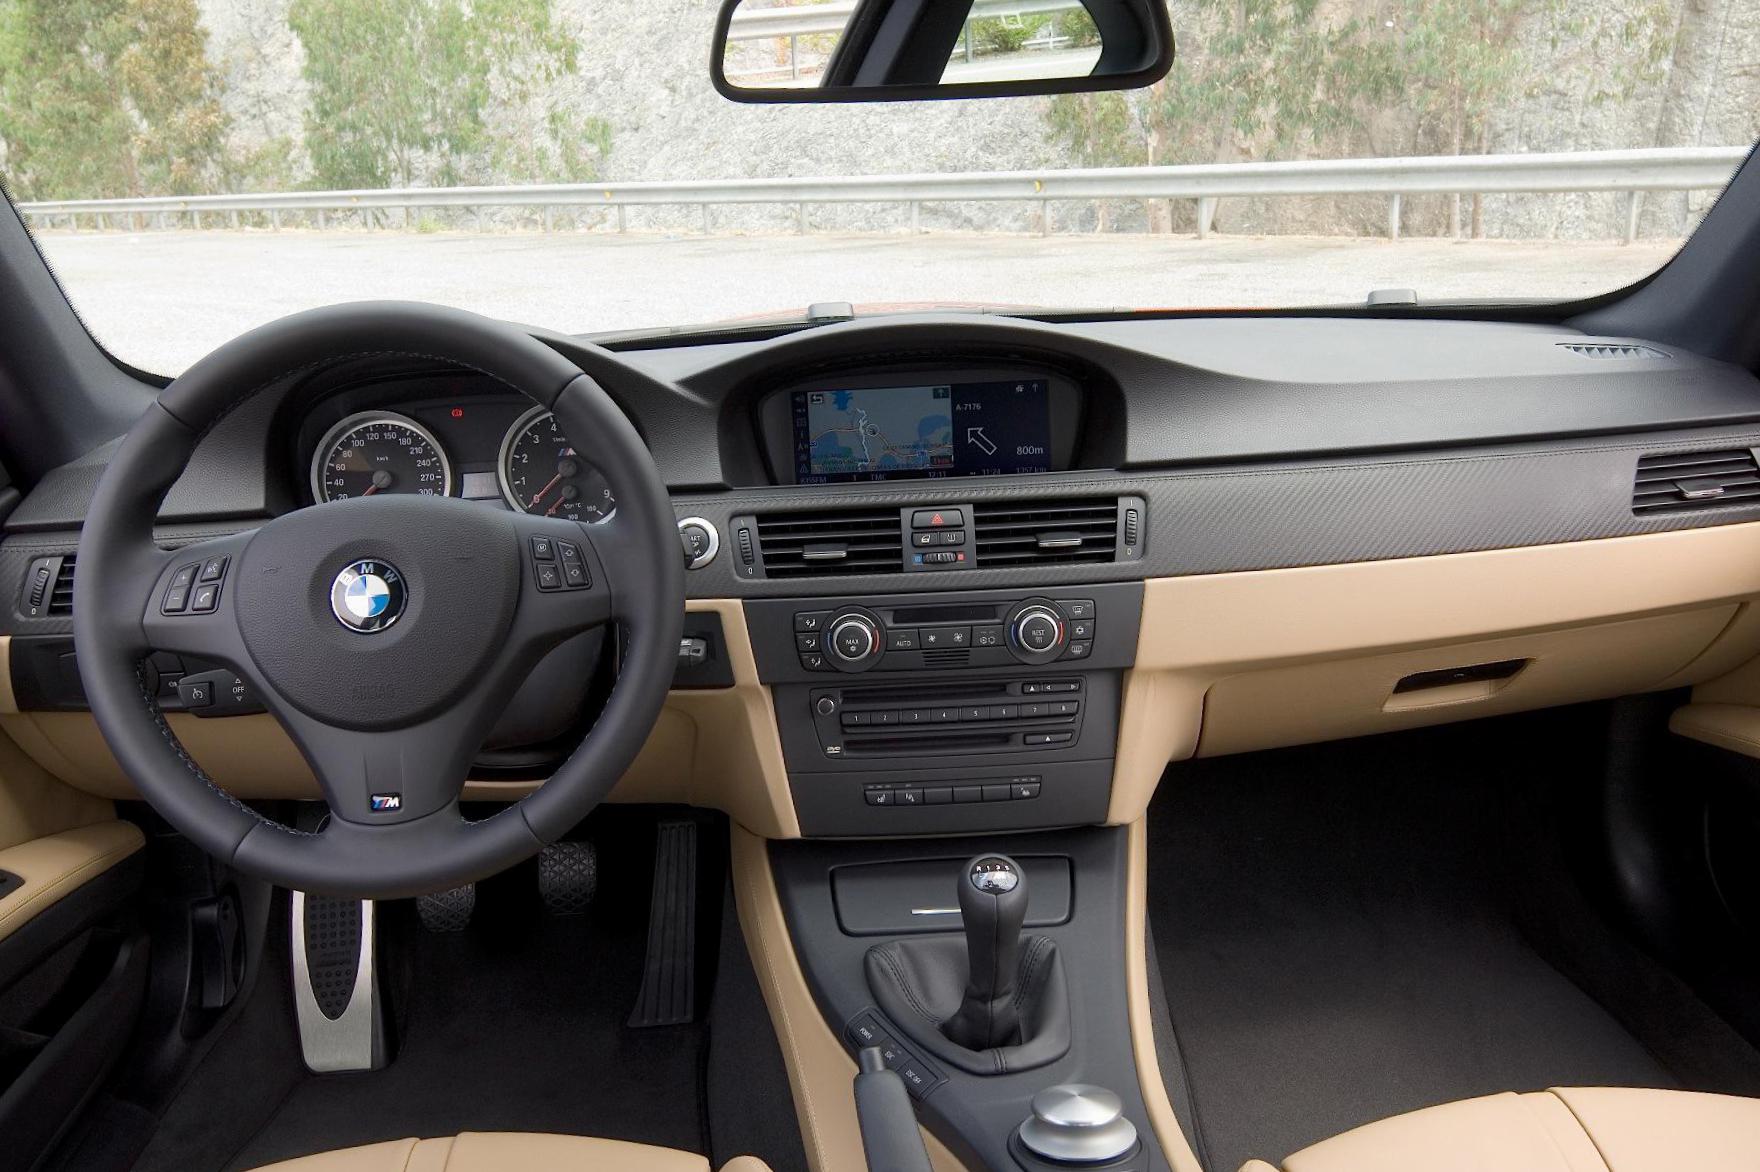 M3 Sedan (E90) BMW Specification 2012